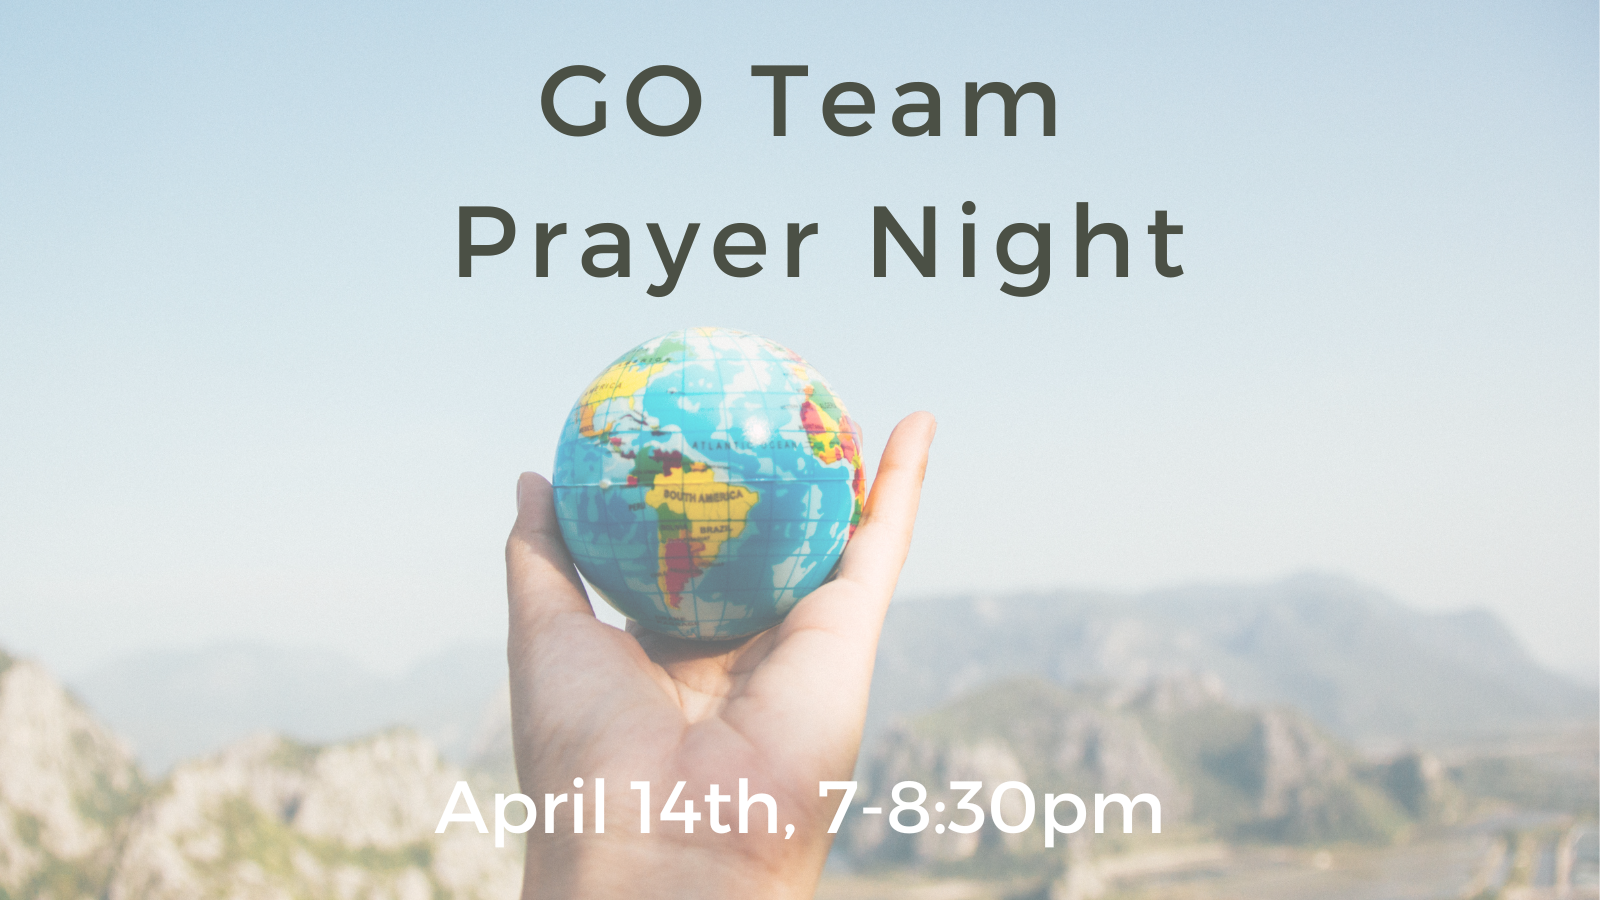 GO Team Prayer night 414 (1600 × 900 px) image